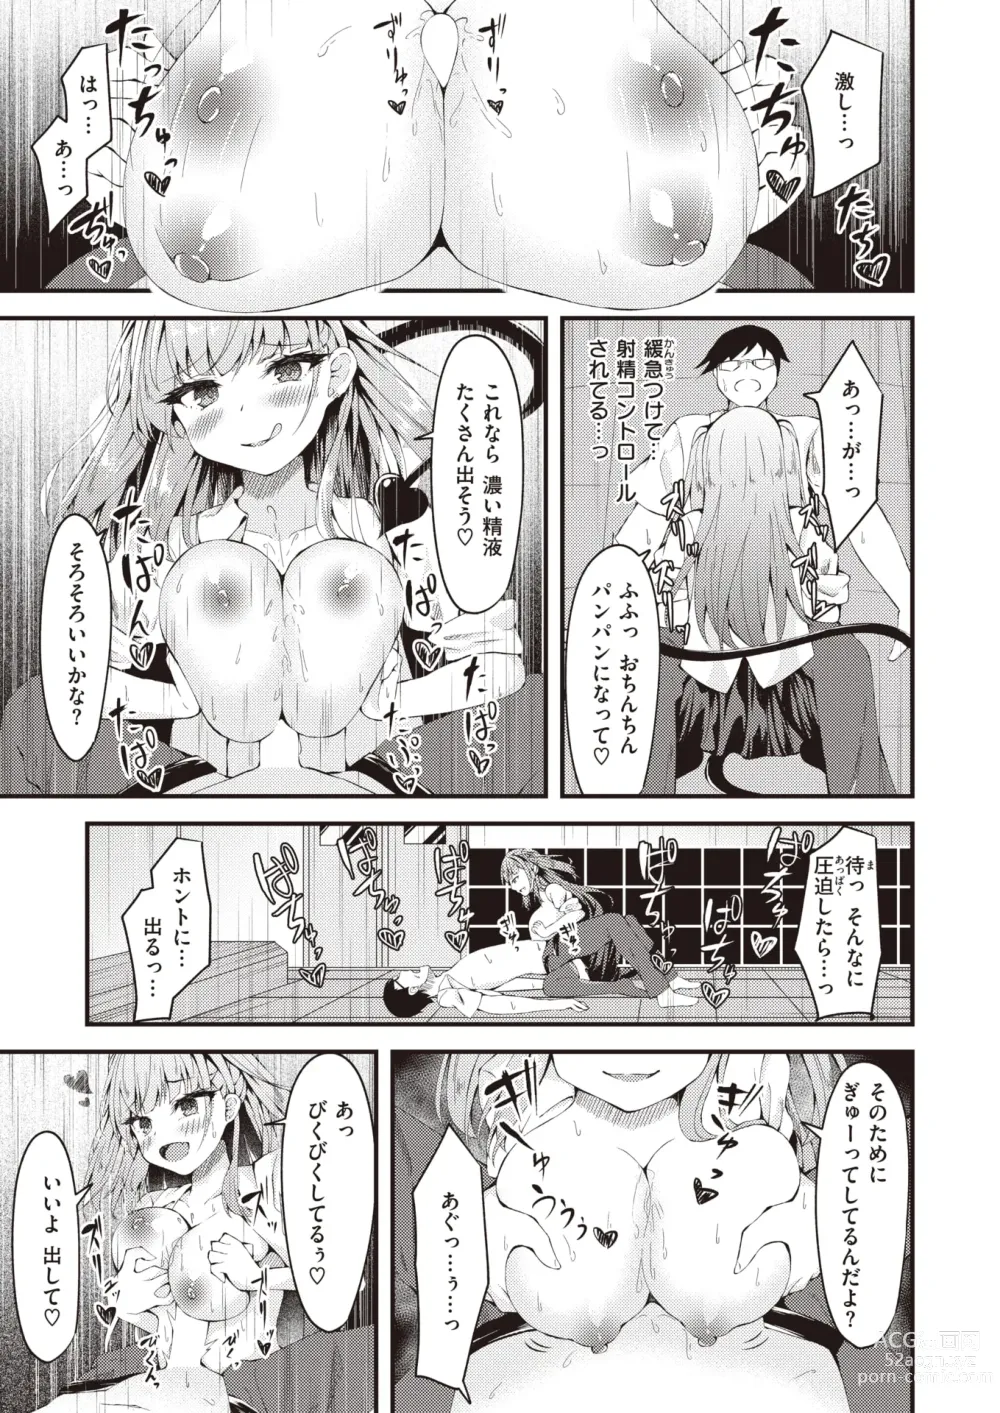 Page 9 of doujinshi 2434065-393712